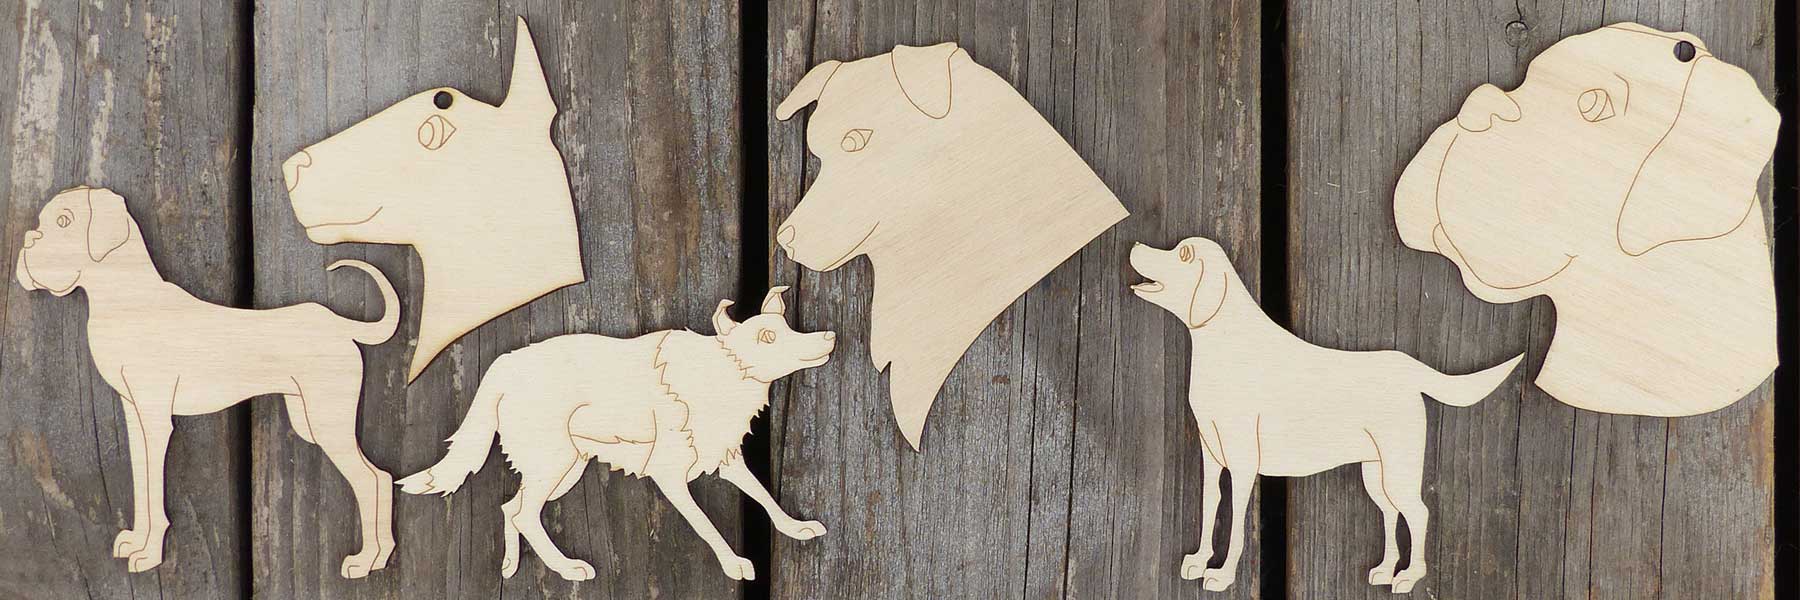 Chalk Blackboard Greyhound Dogs Head Shape for Memos Notes & Home Decor